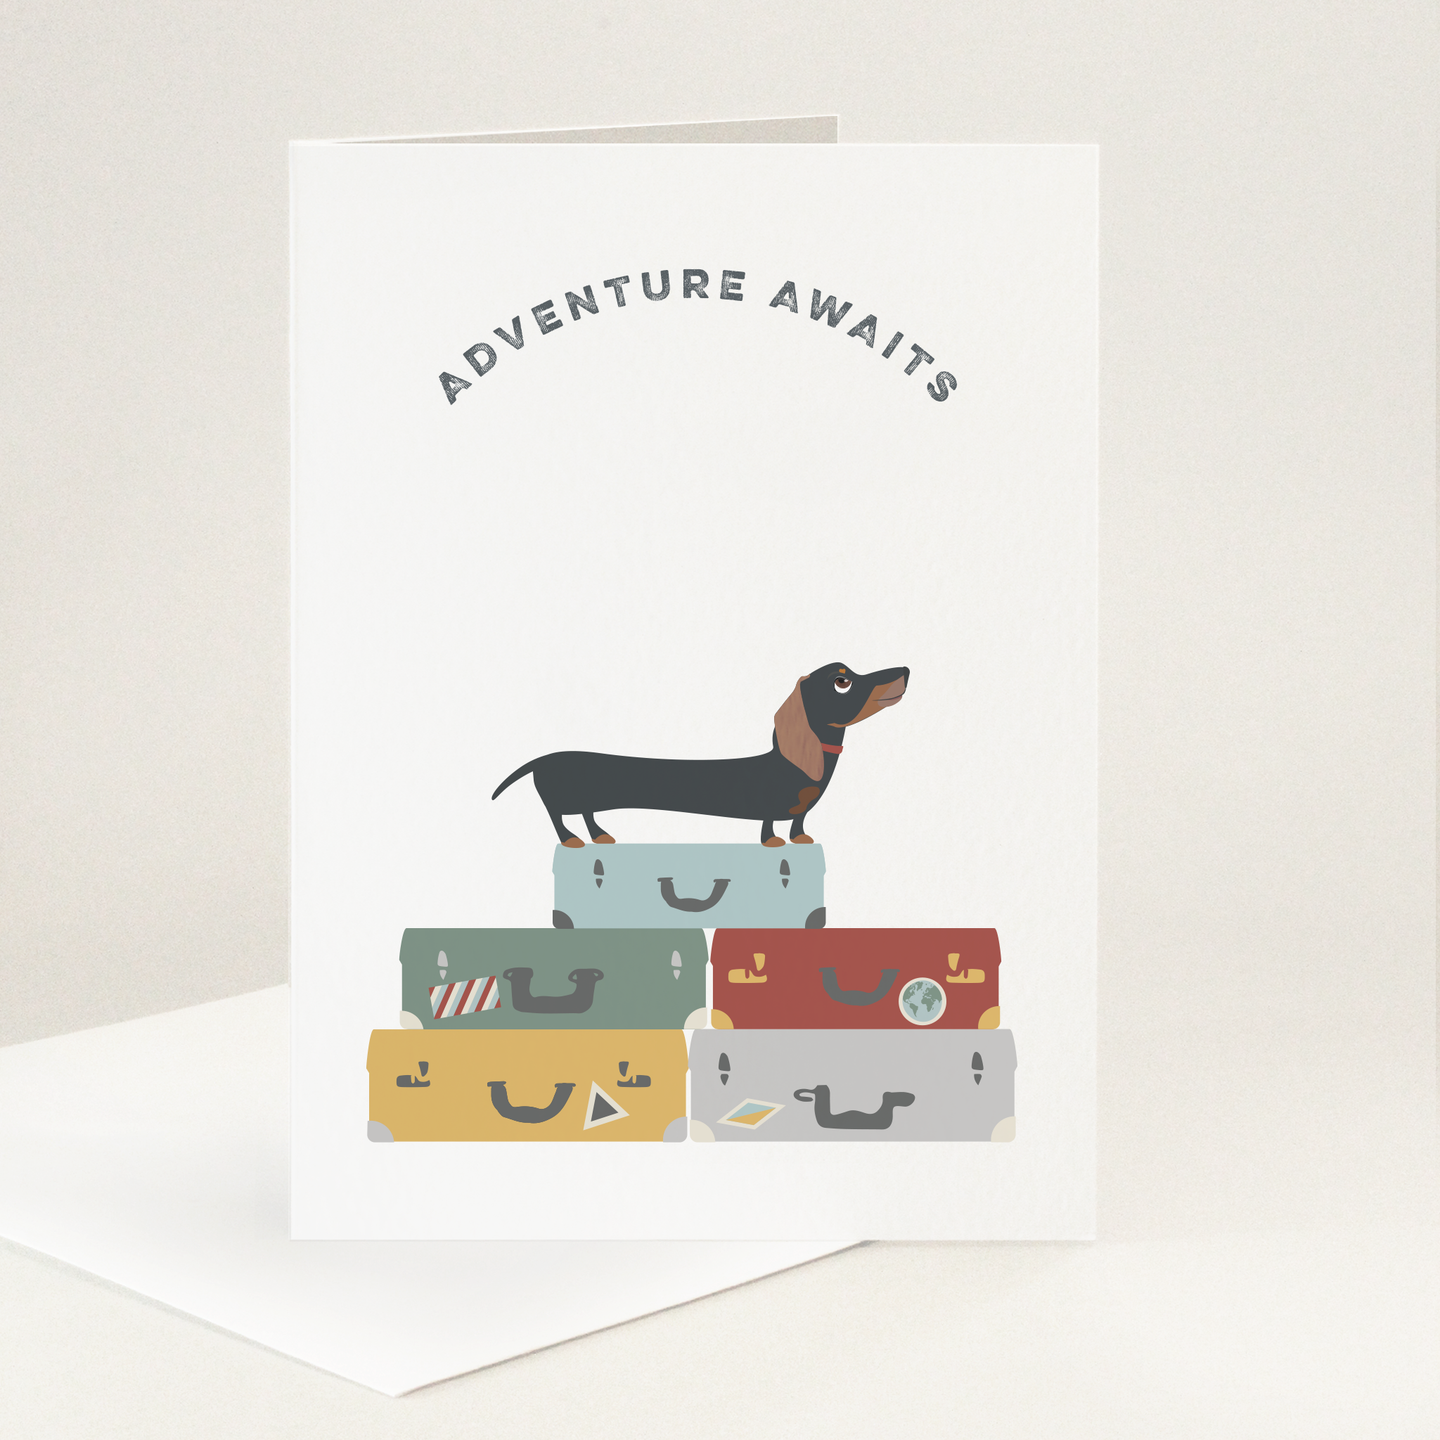 Winston Sausage Dog Adventure Awaits card